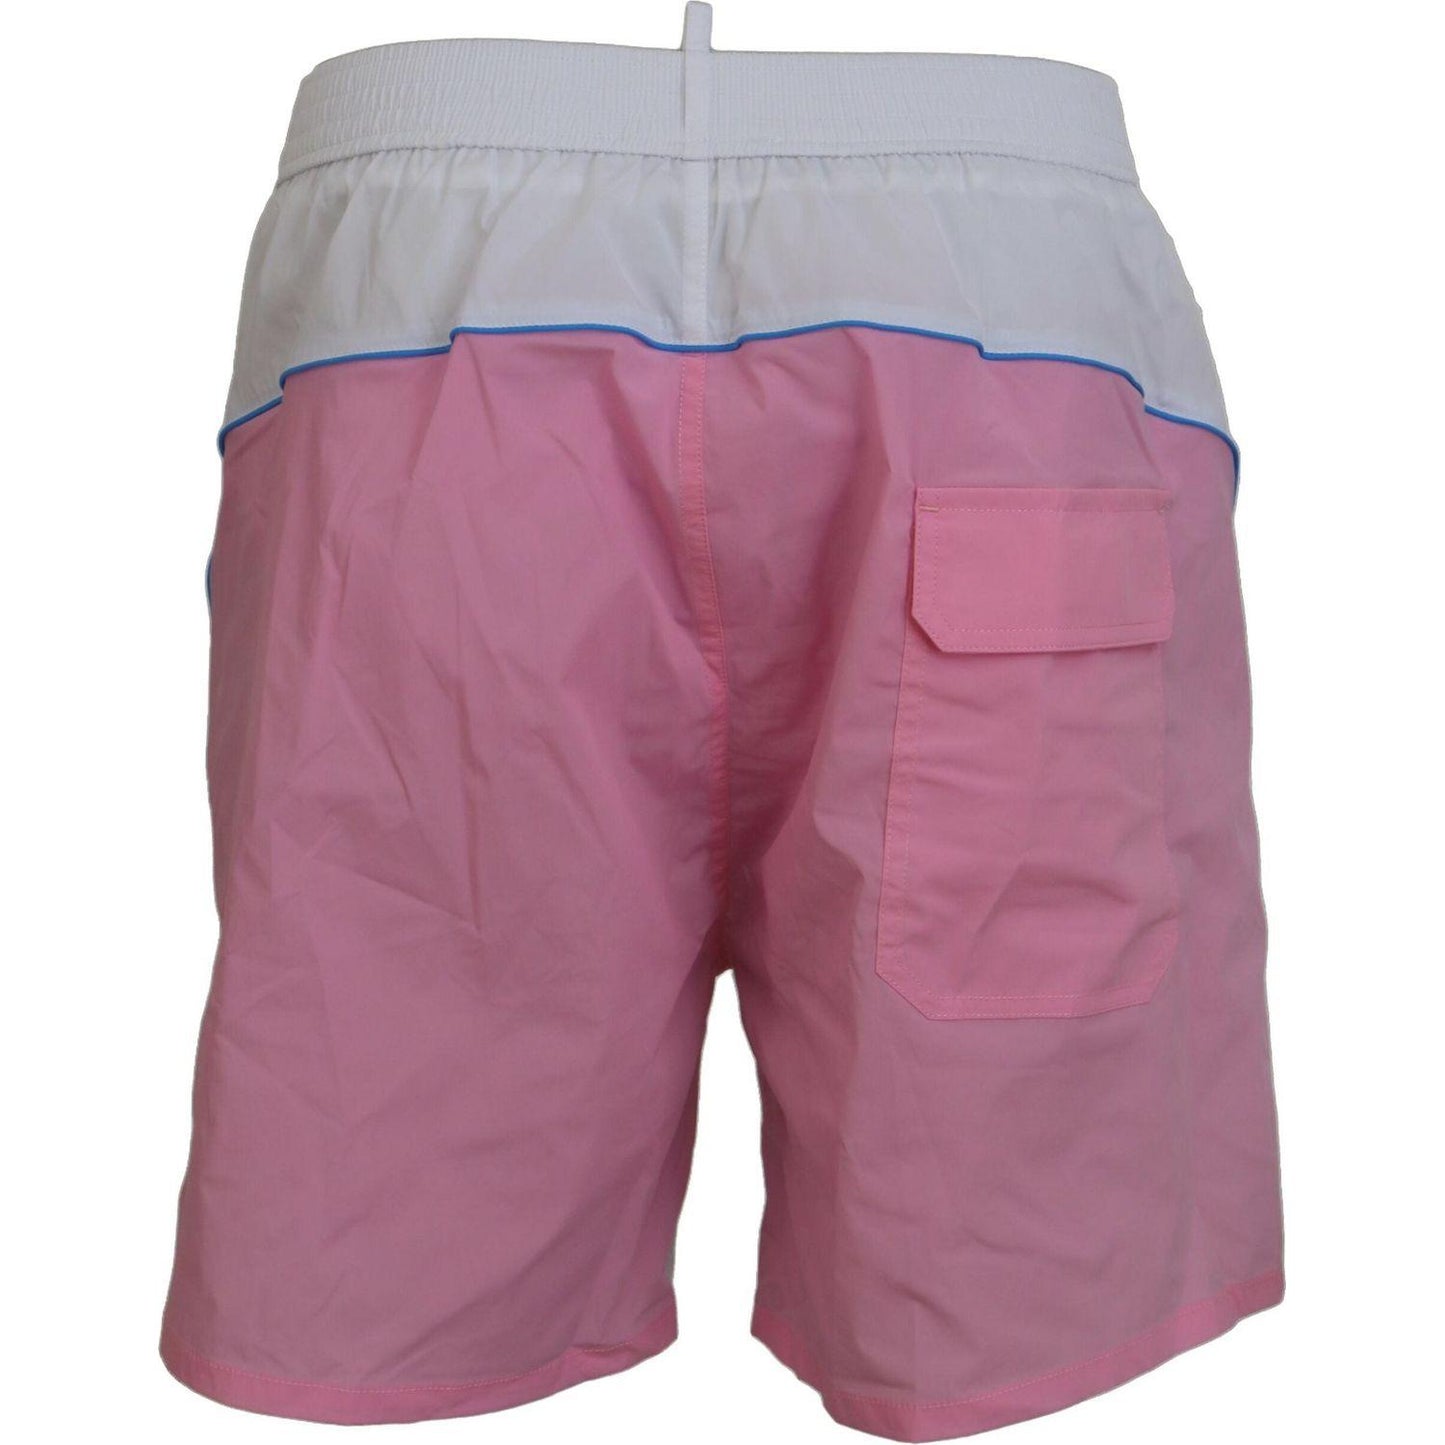 Dsquared² Chic White & Pink Print Swim Shorts white-pink-logo-print-men-beachwear-shorts-swimwear IMG_6151-scaled-26b44c53-c85.jpg